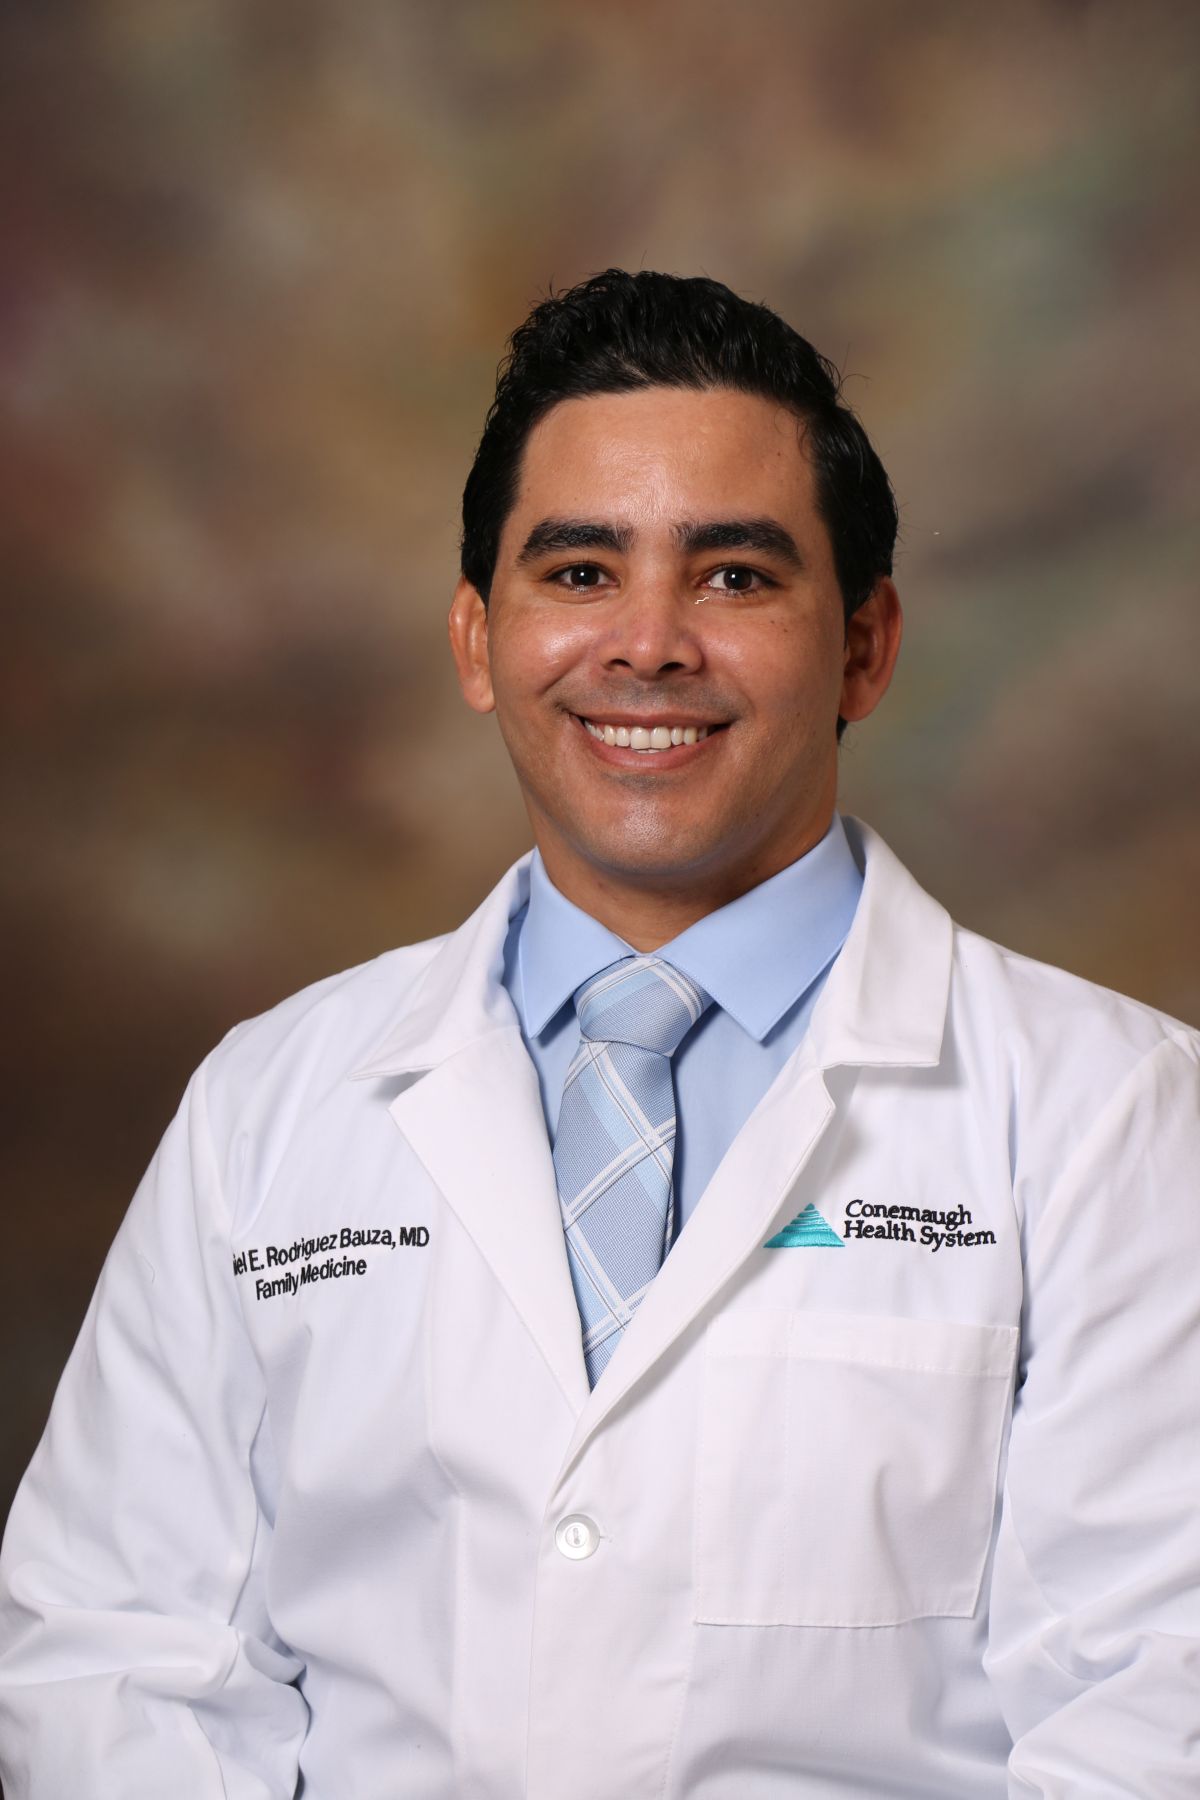 Daniel Rodriguez Bauza, MD